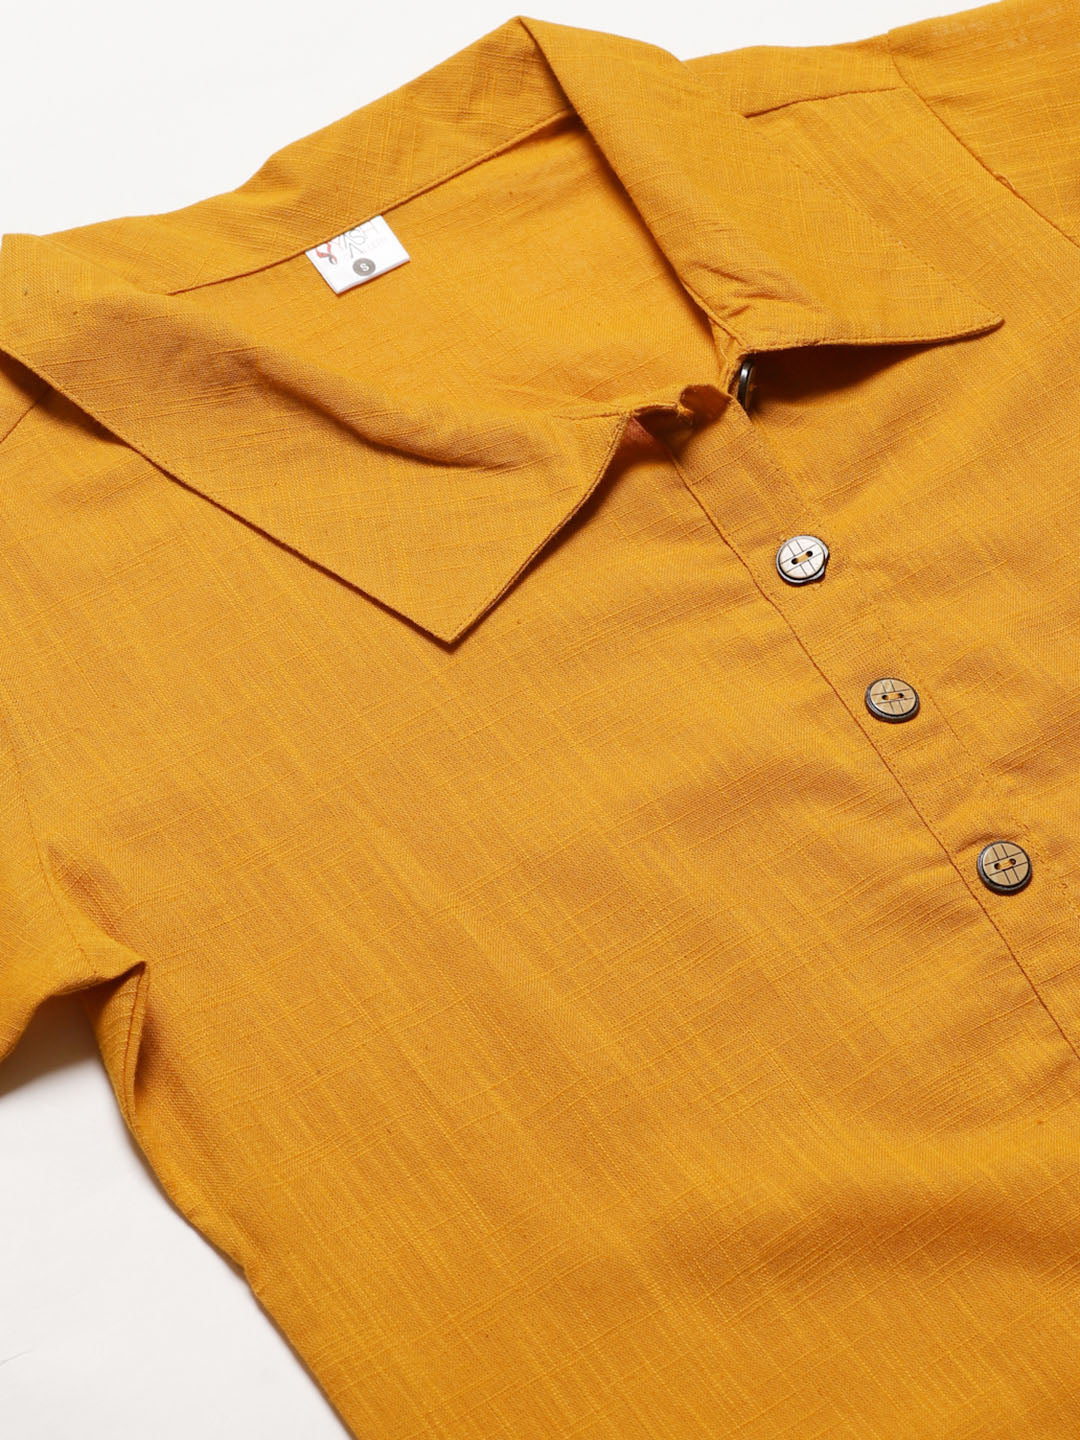  Cotton Slub Solid Shirt Style Top (Yellow)